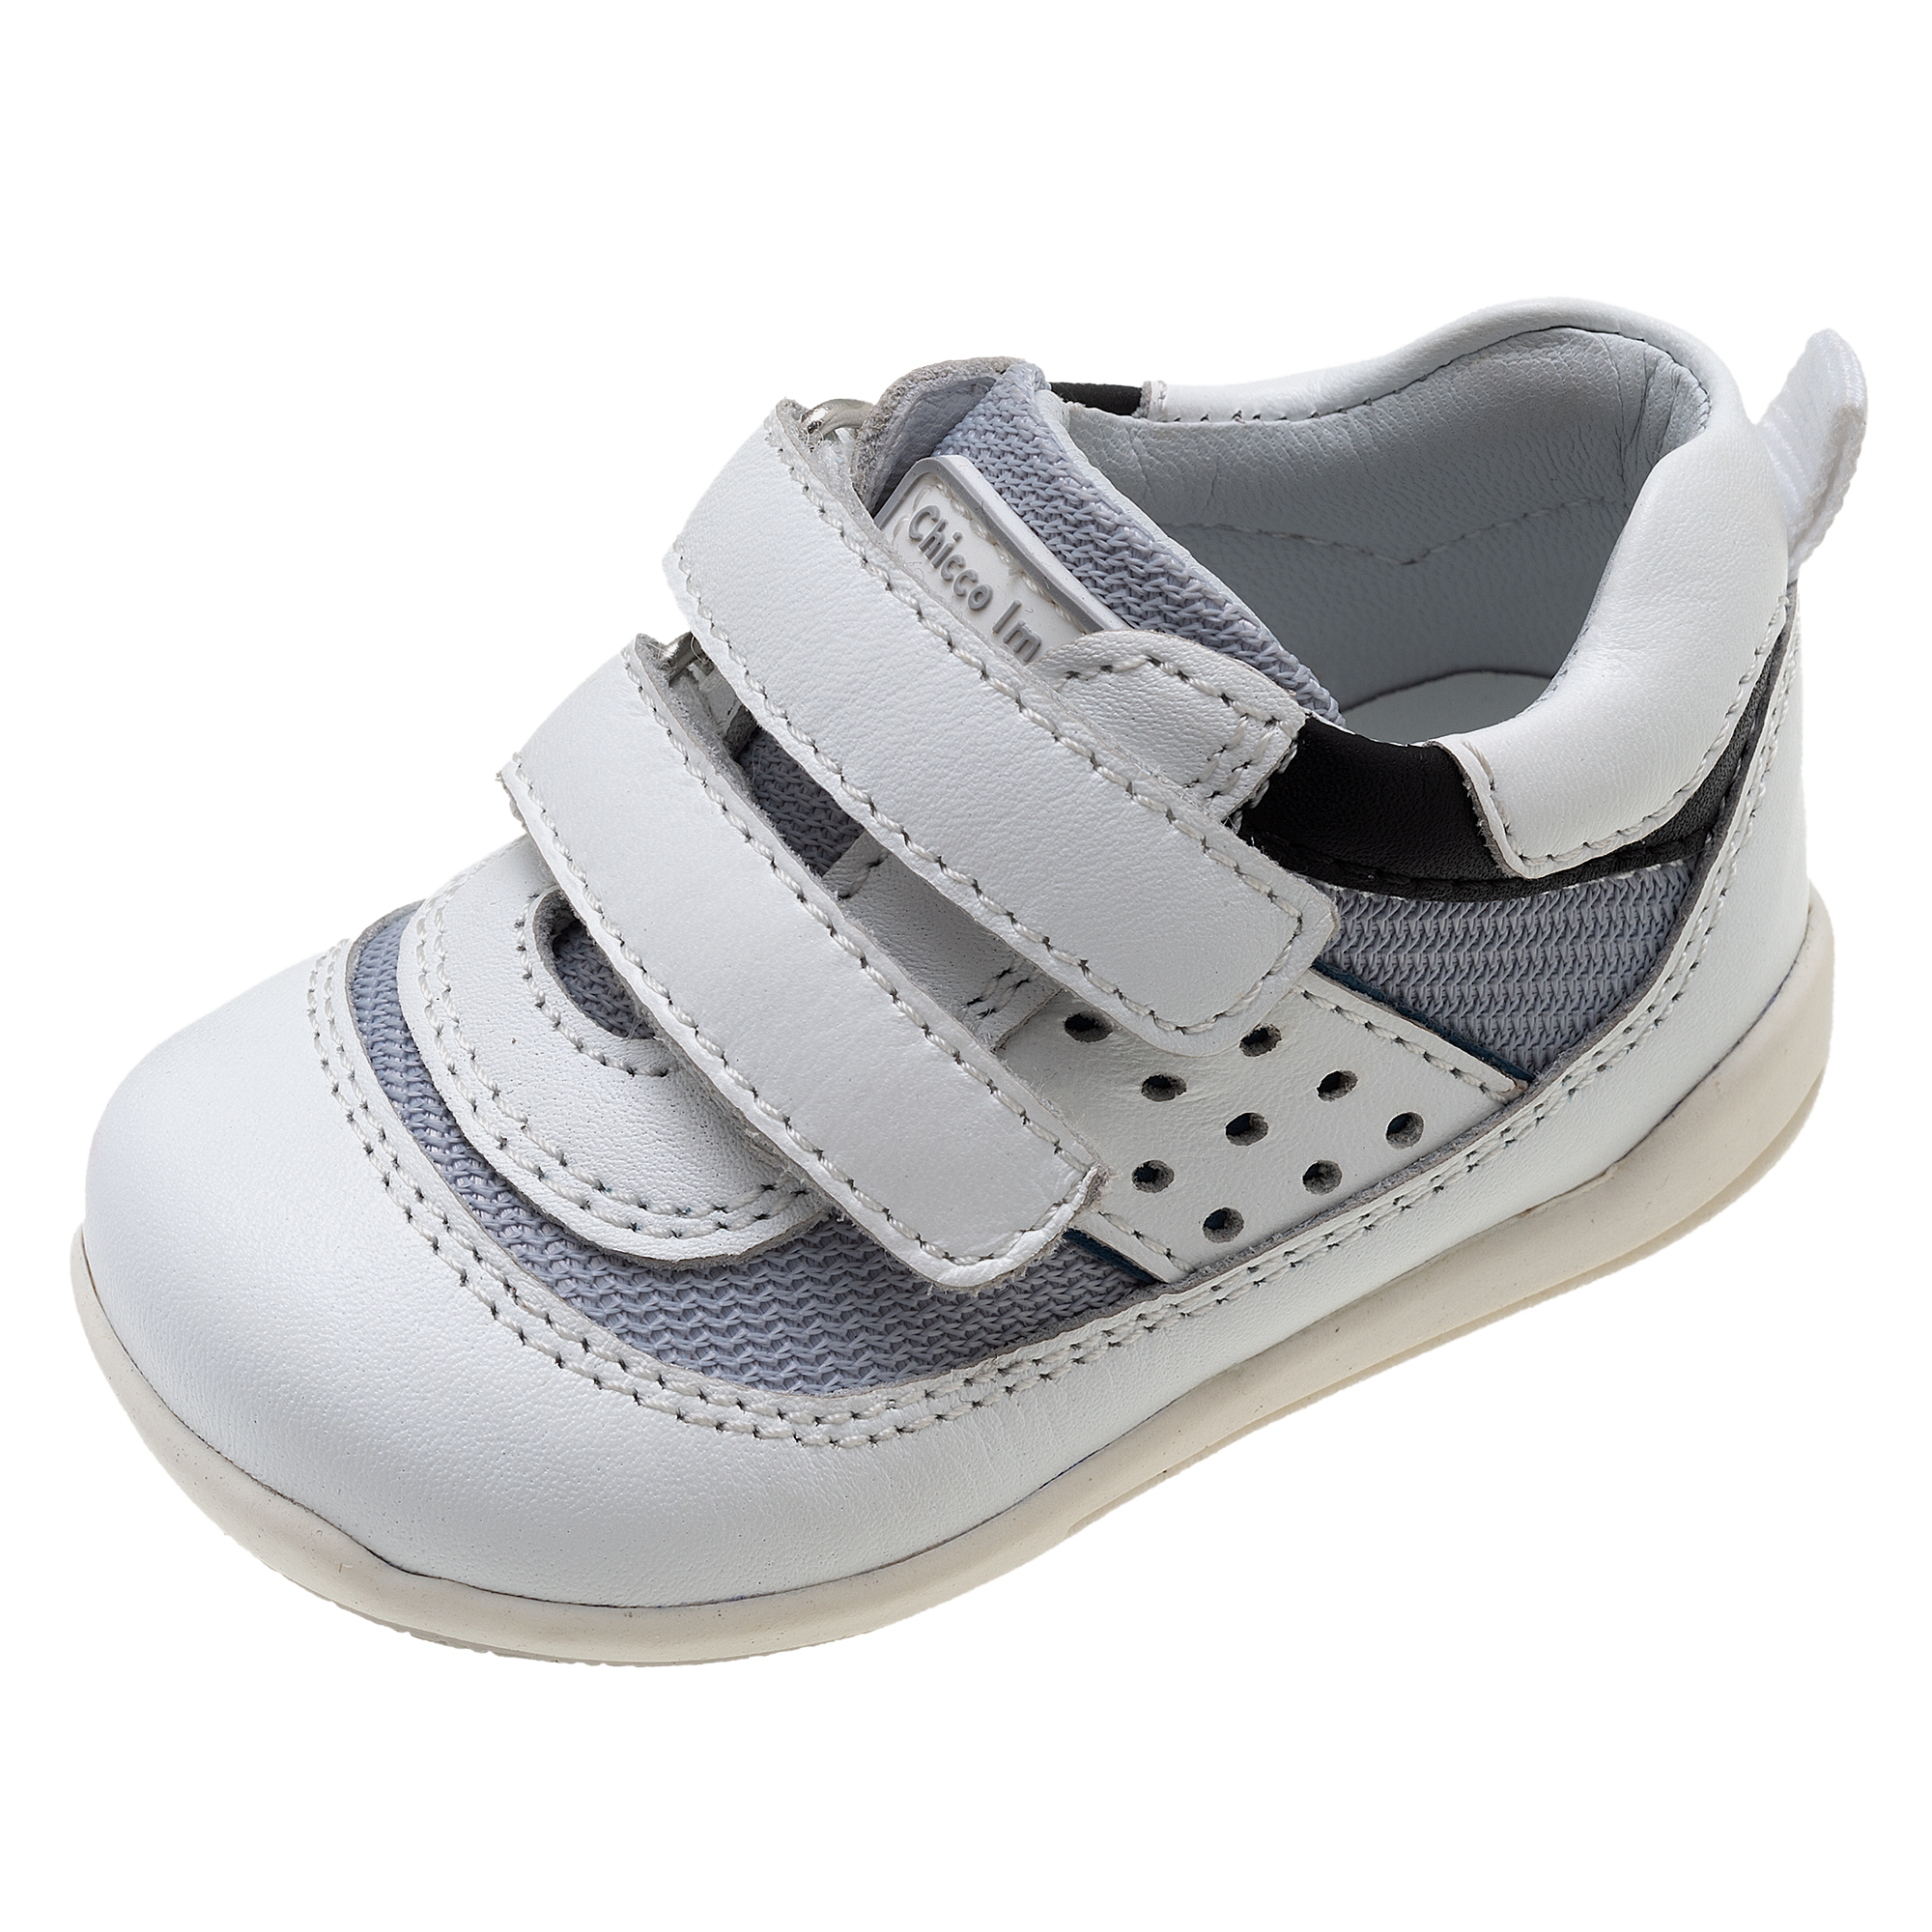 Pantof sport copii Chicco G32, piele, alb, 61511 CHICCO